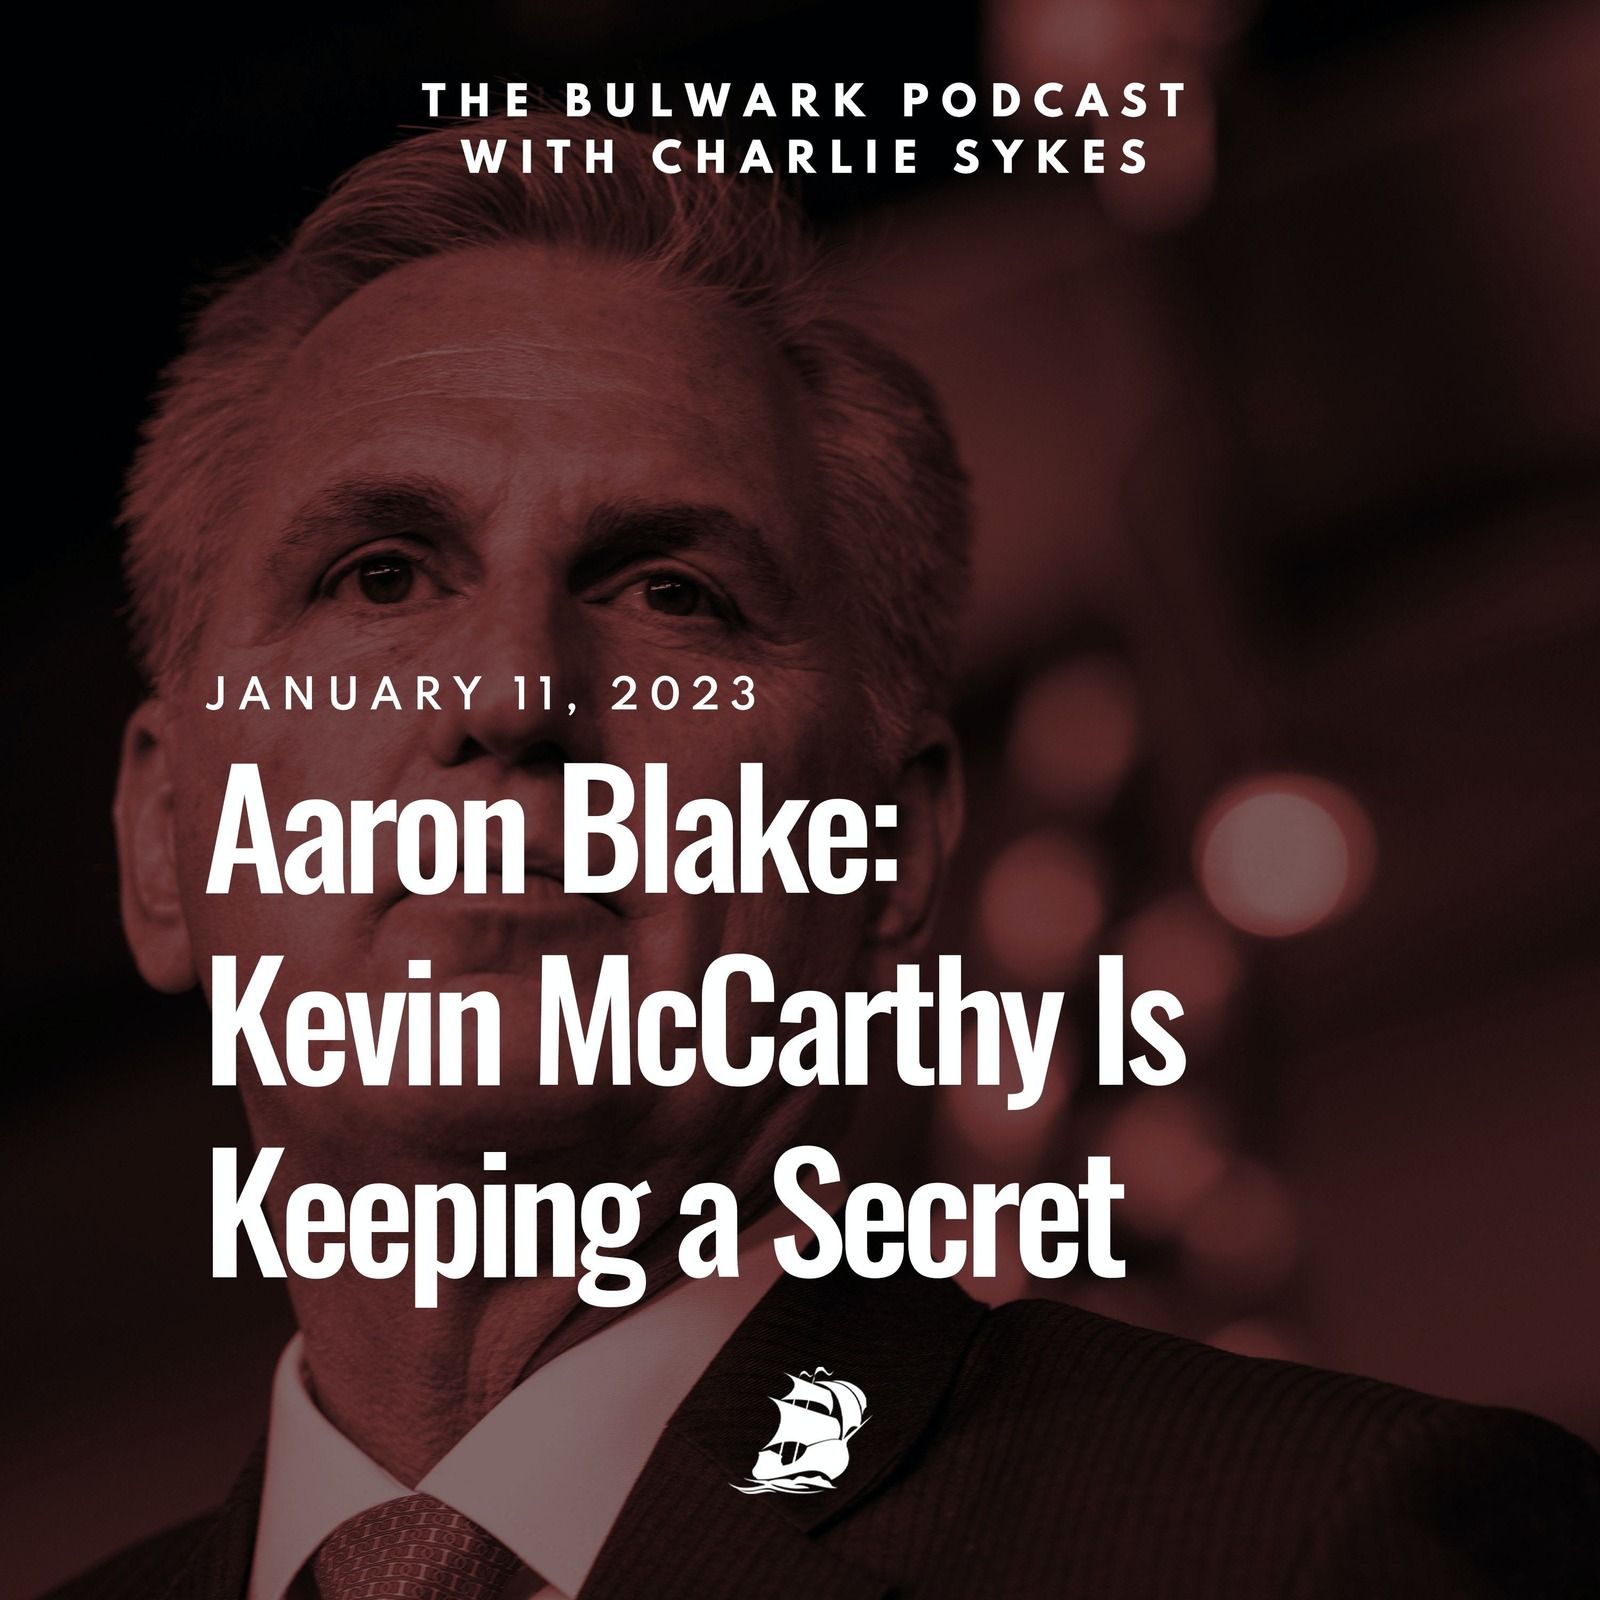 Aaron Blake: Kevin McCarthy Is Keeping a Secret